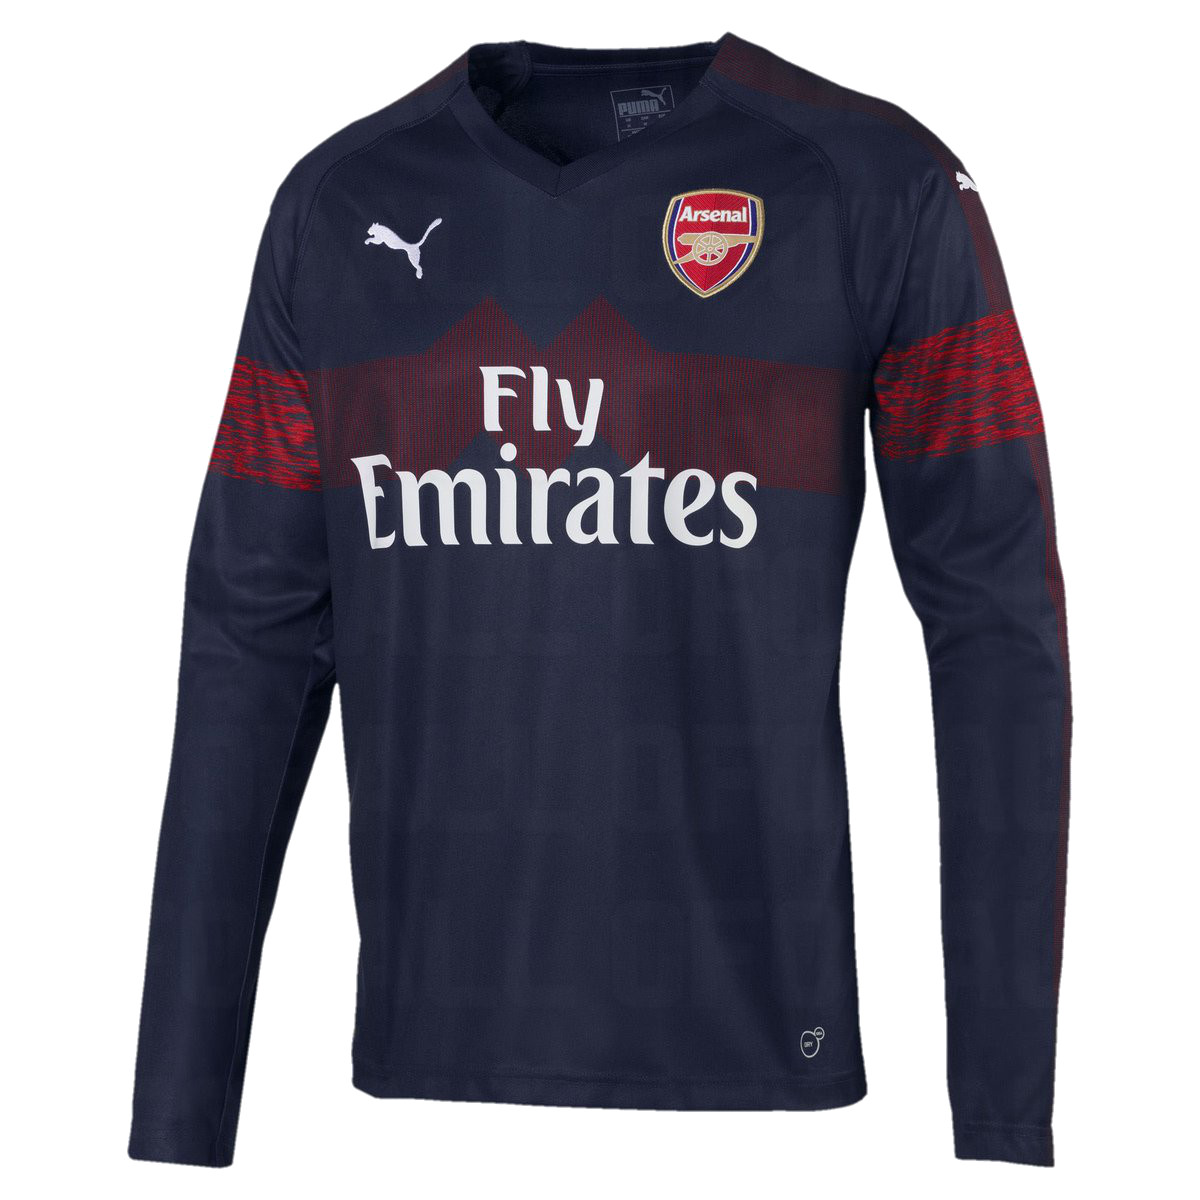 Arsenal 2019 maillot manches longue exterieur foot